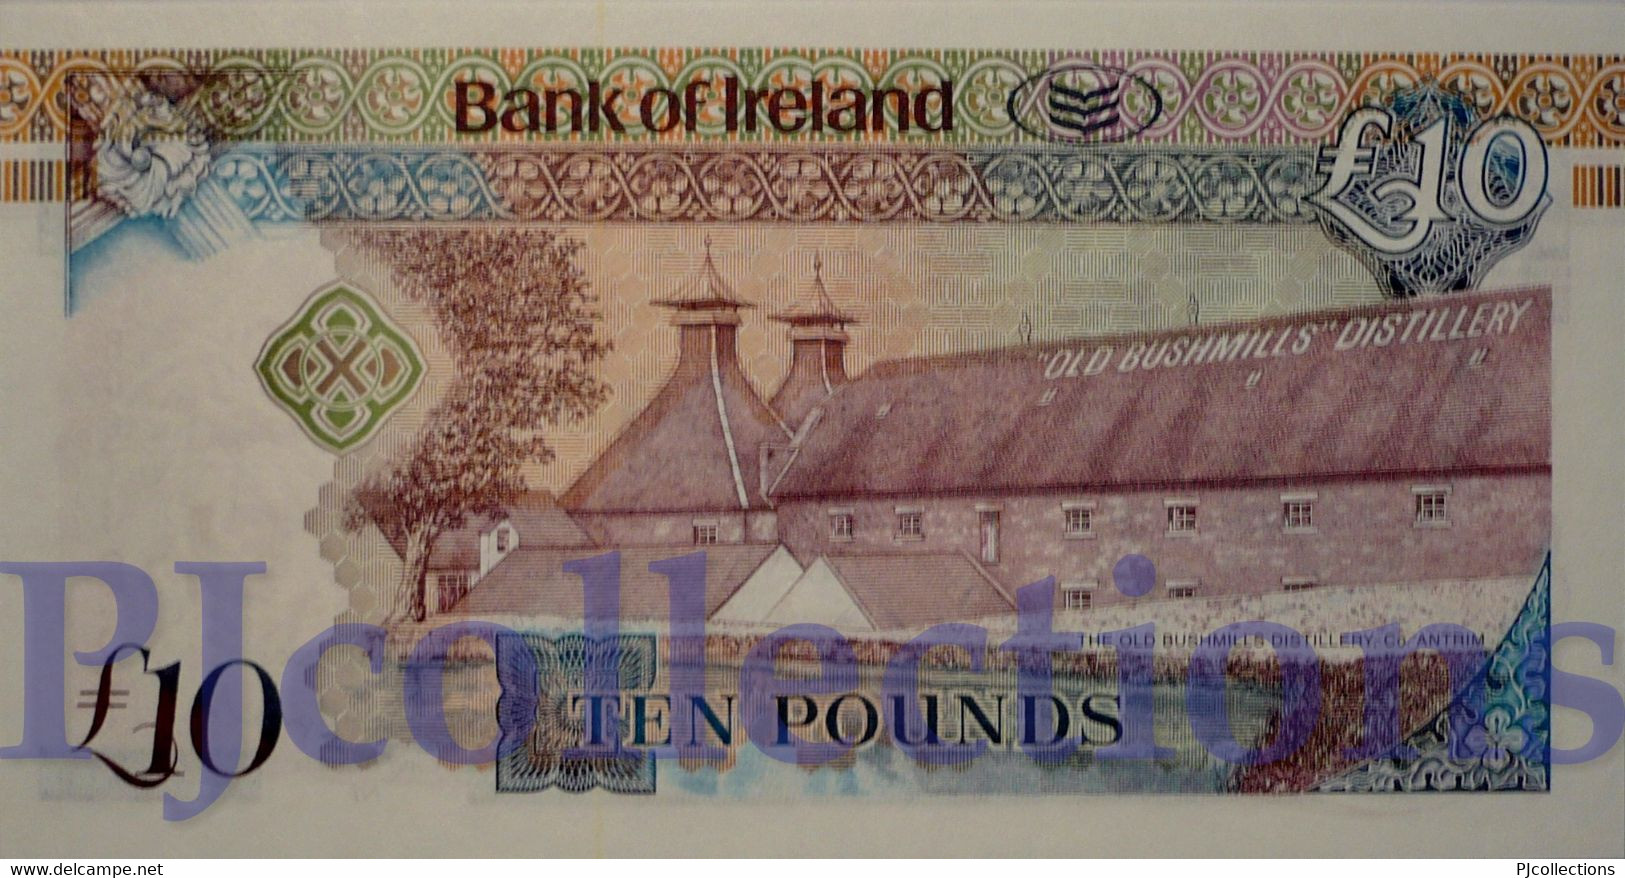 NORTHERN IRELAND 10 POUNDS 2008 PICK 84 UNC - Ireland